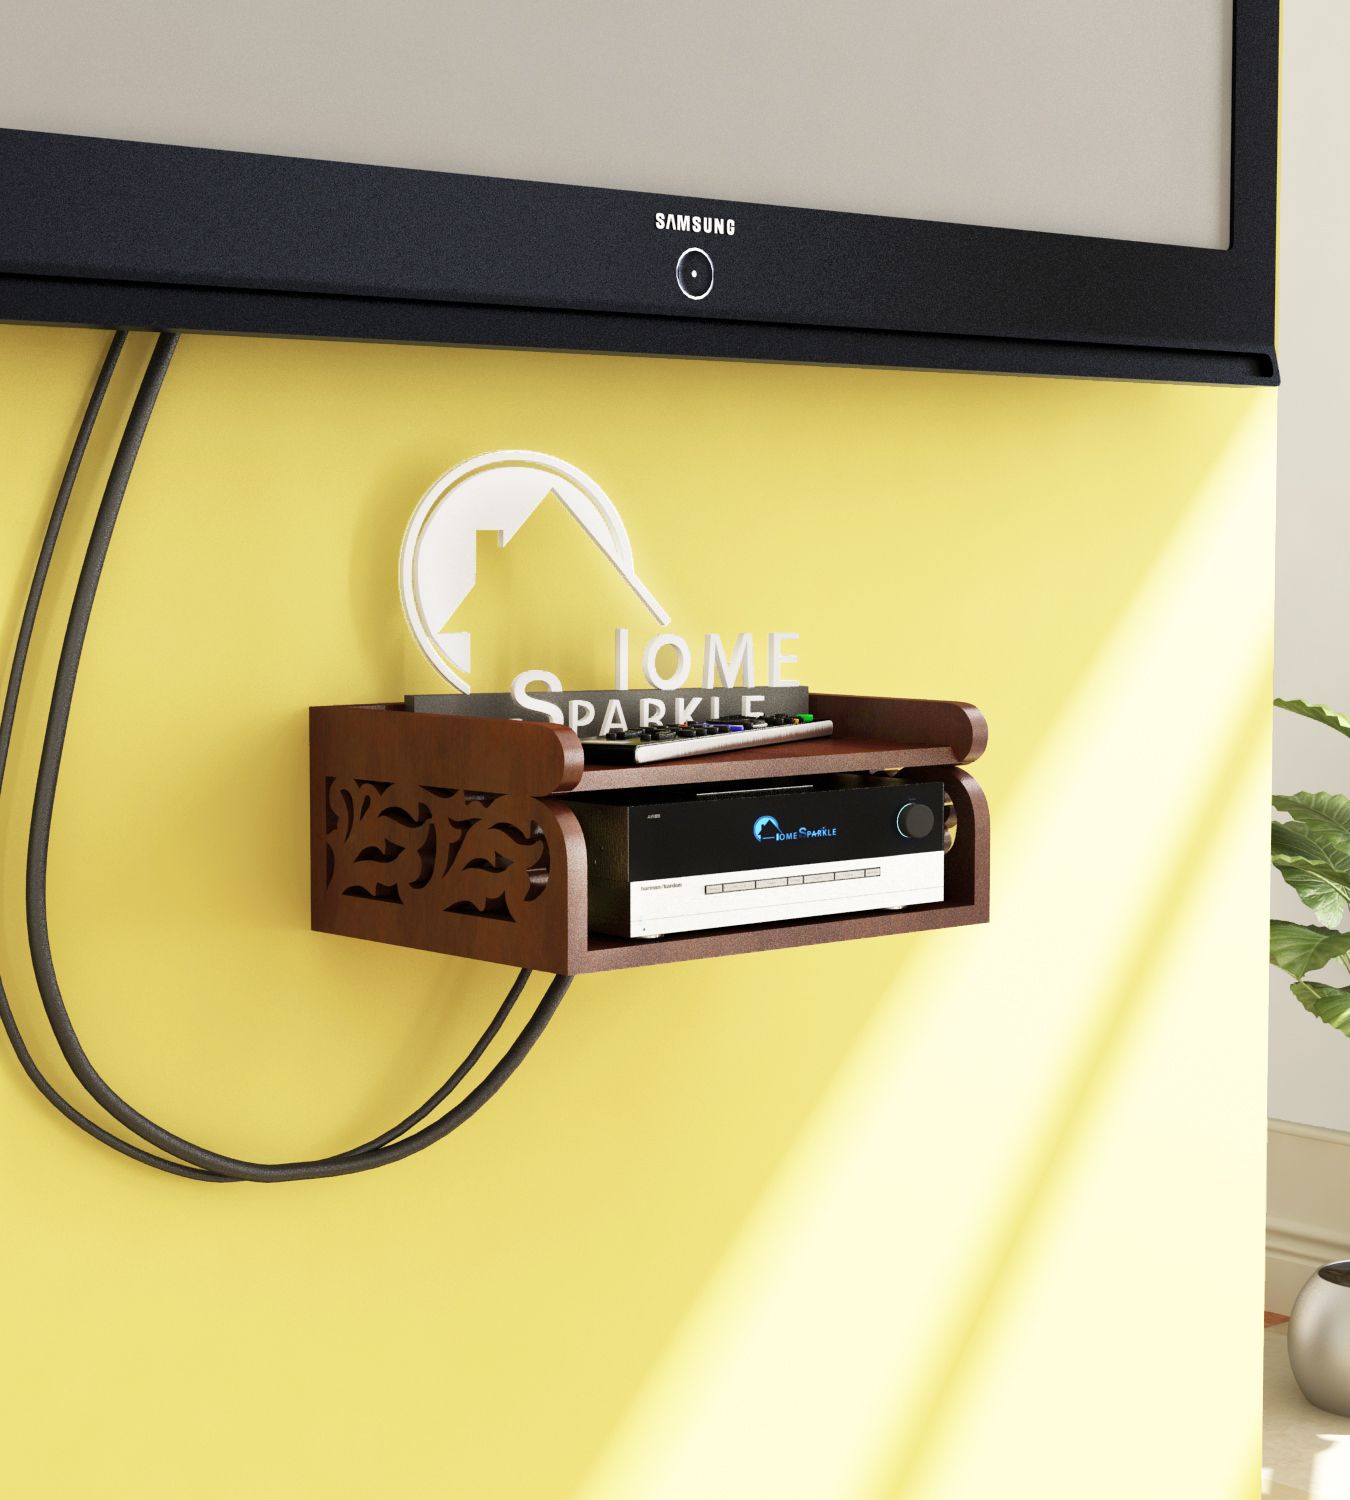     			Home Sparkle Set Top Box Holder/Wifi Modem Stand, Suitable For Living Room/ Bedroom ( Designed By Craftsman)